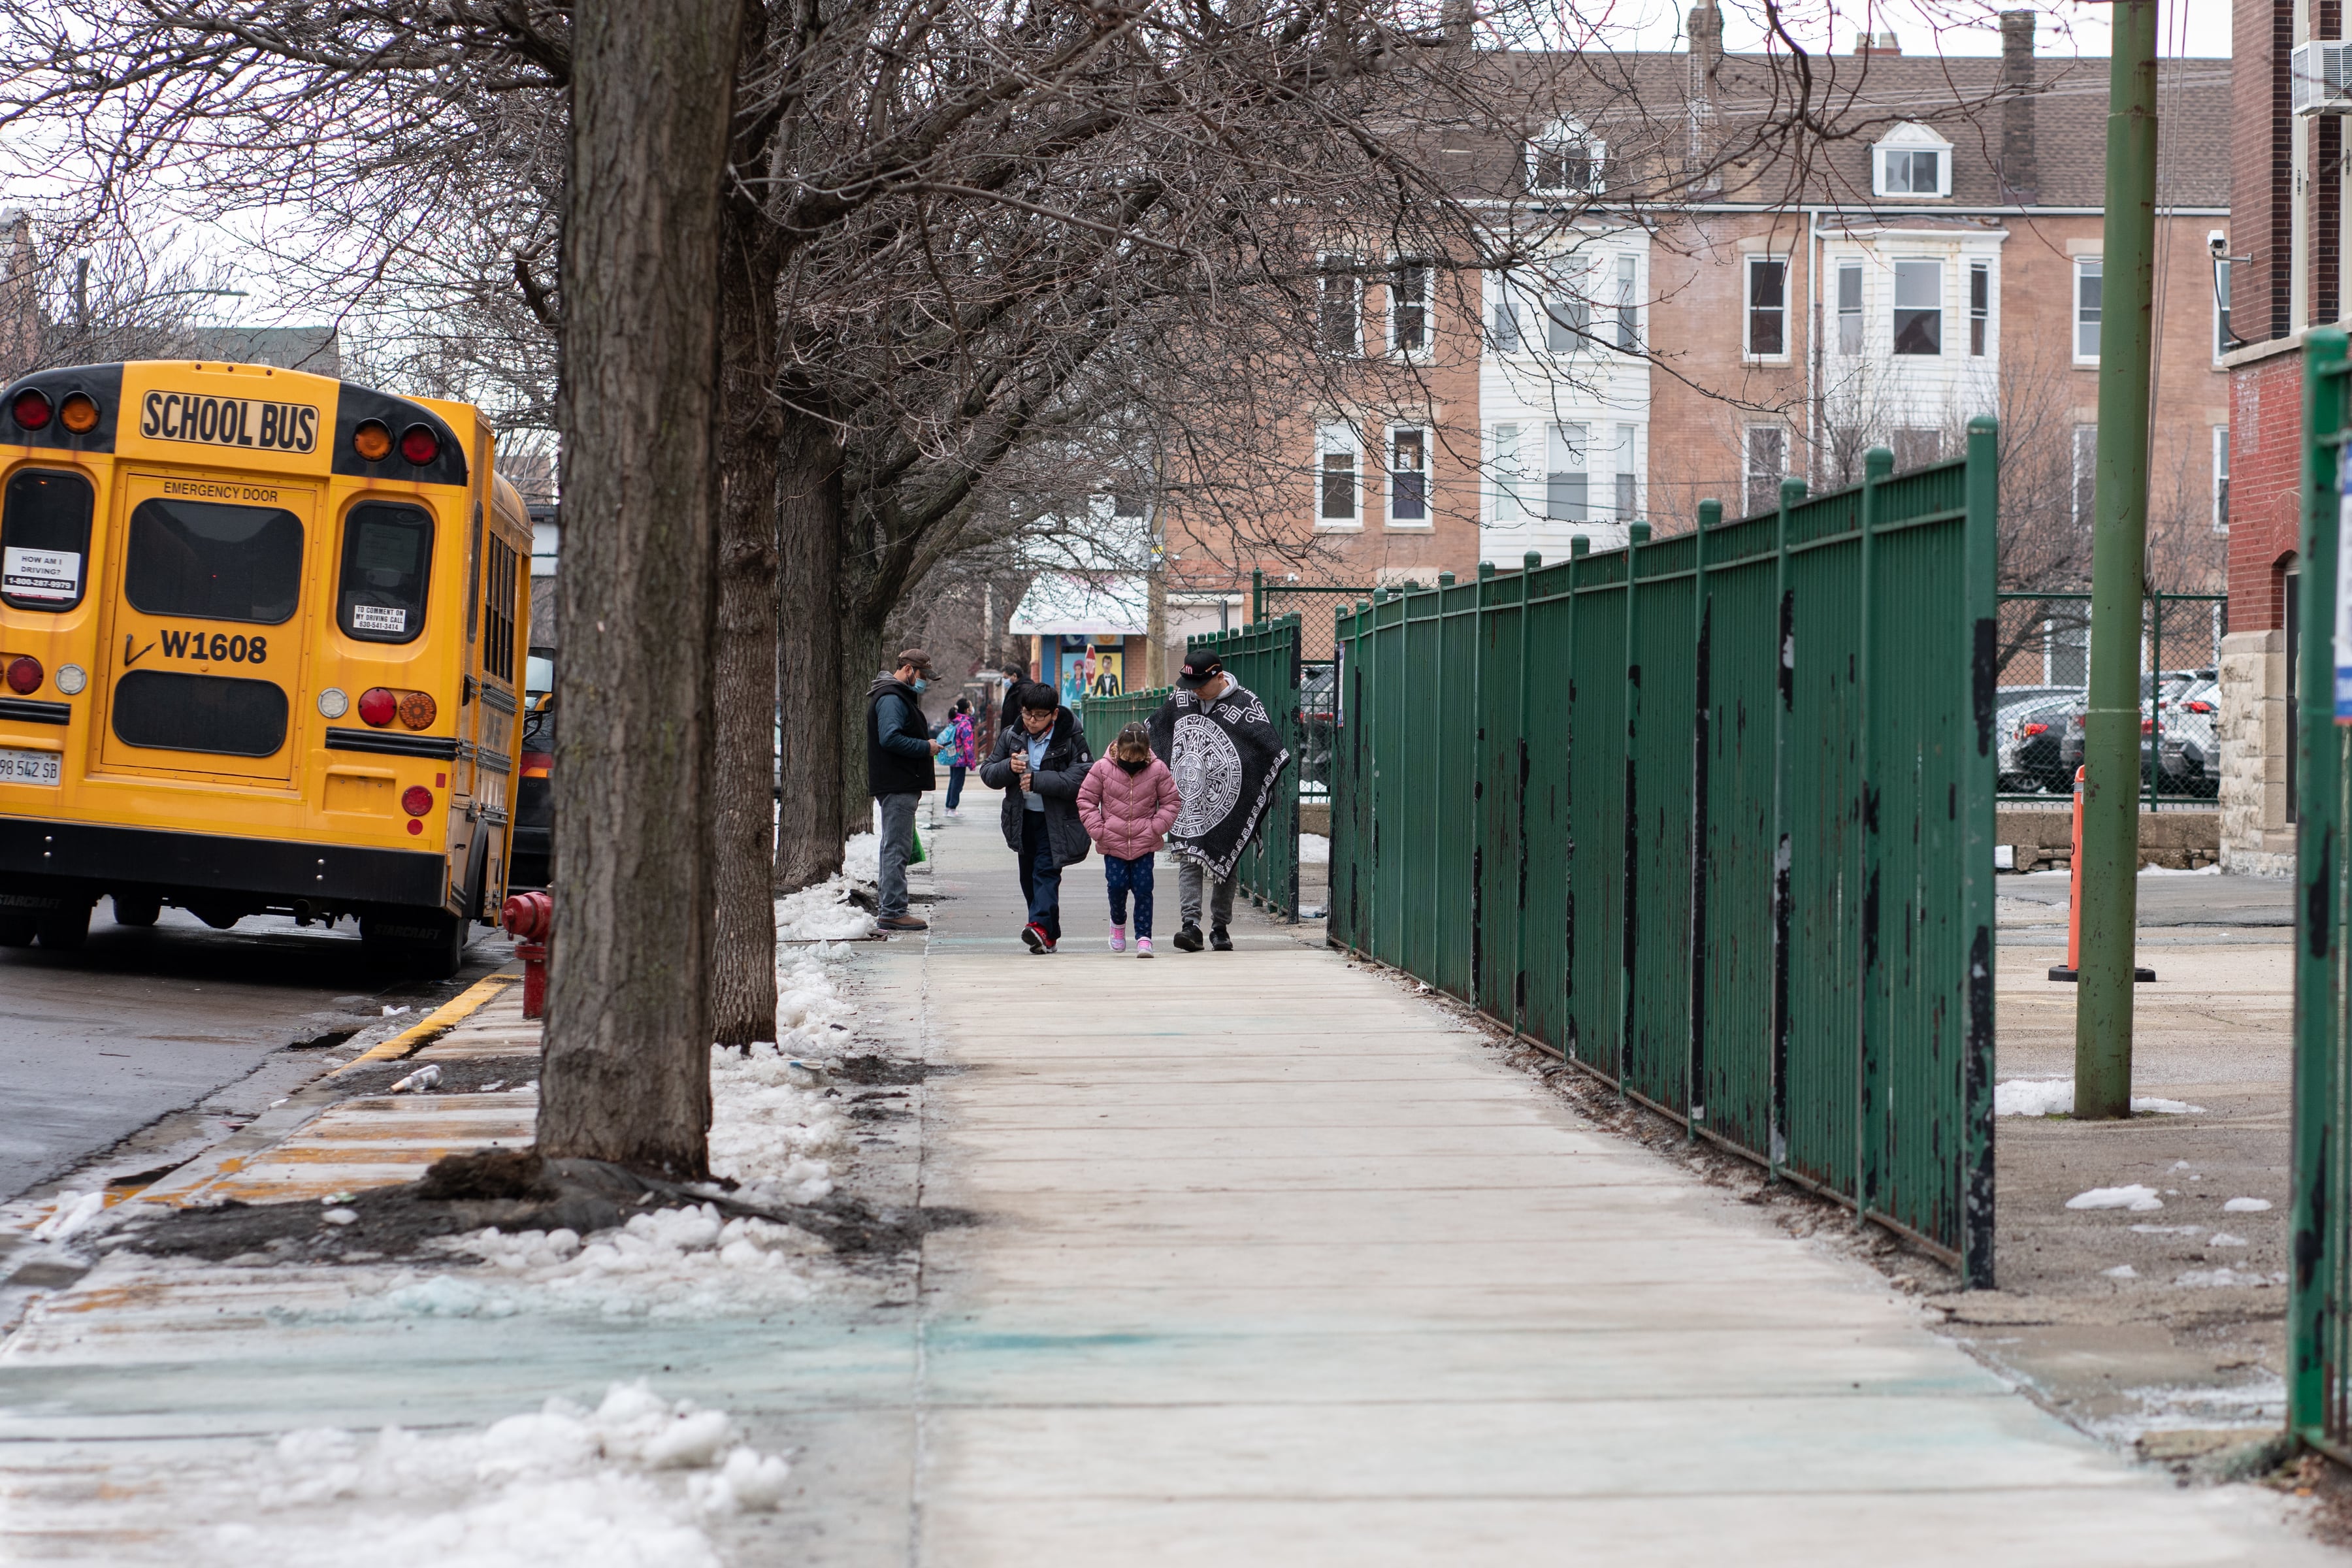 A man and two children walk down a sidewalk by a yellow school bus.